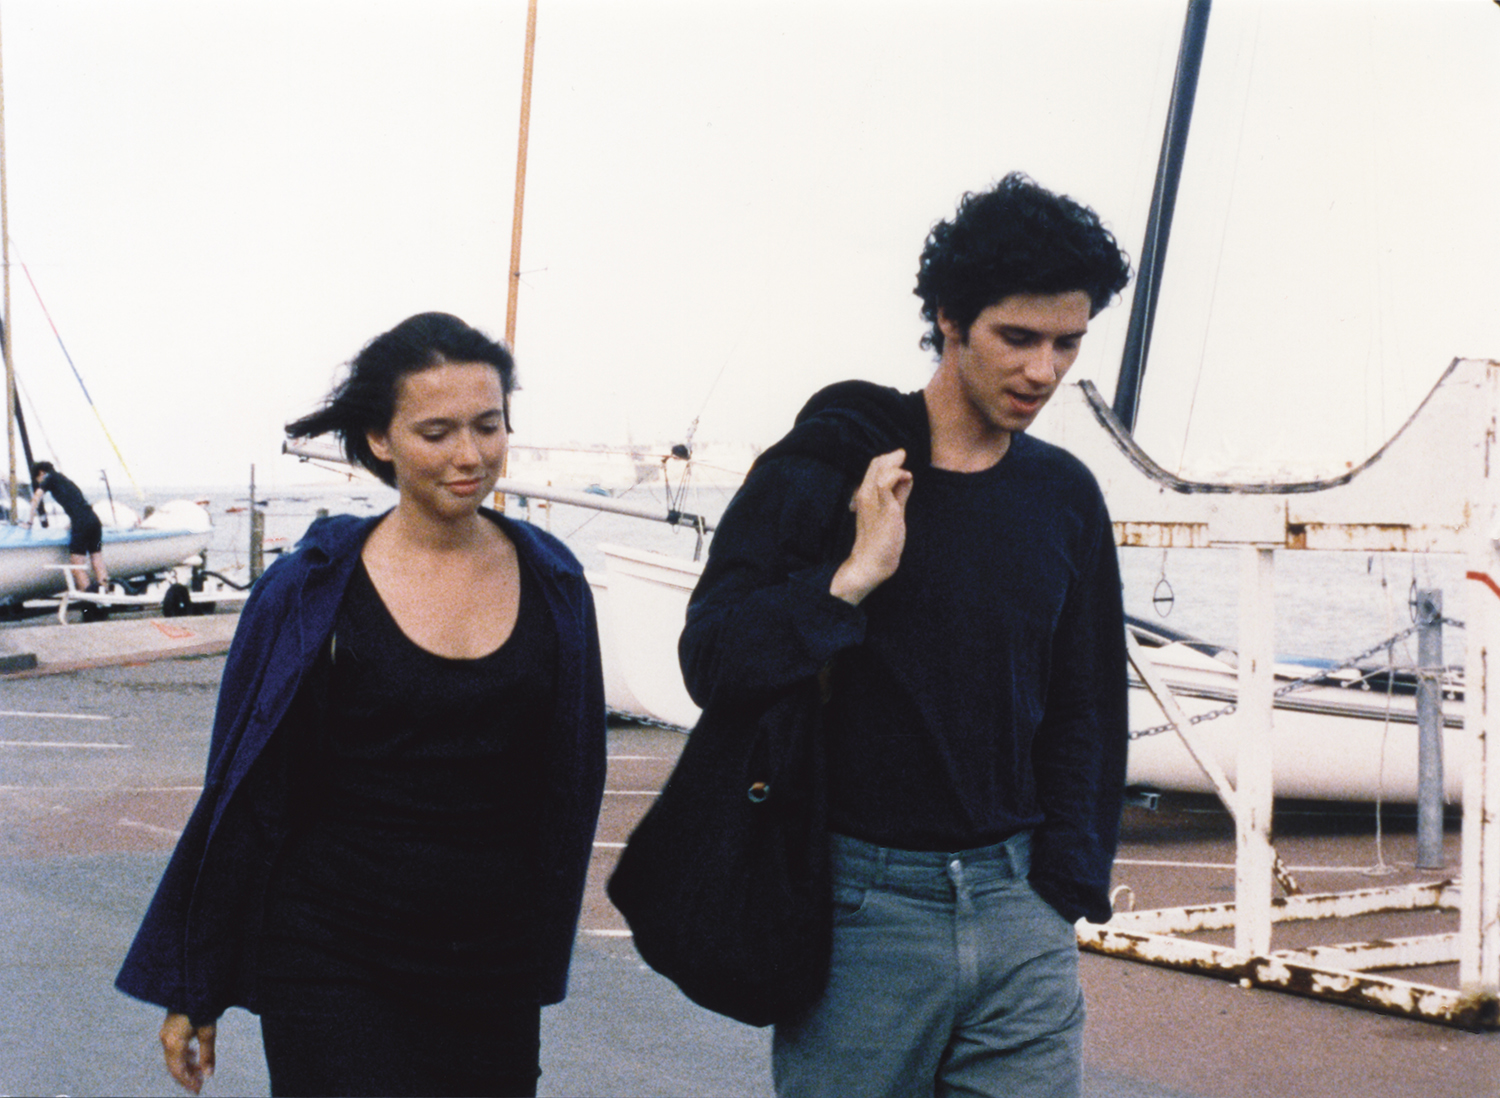 Still of Amanda Langlet and Melvil Poupaud in Conte d'été (1996)